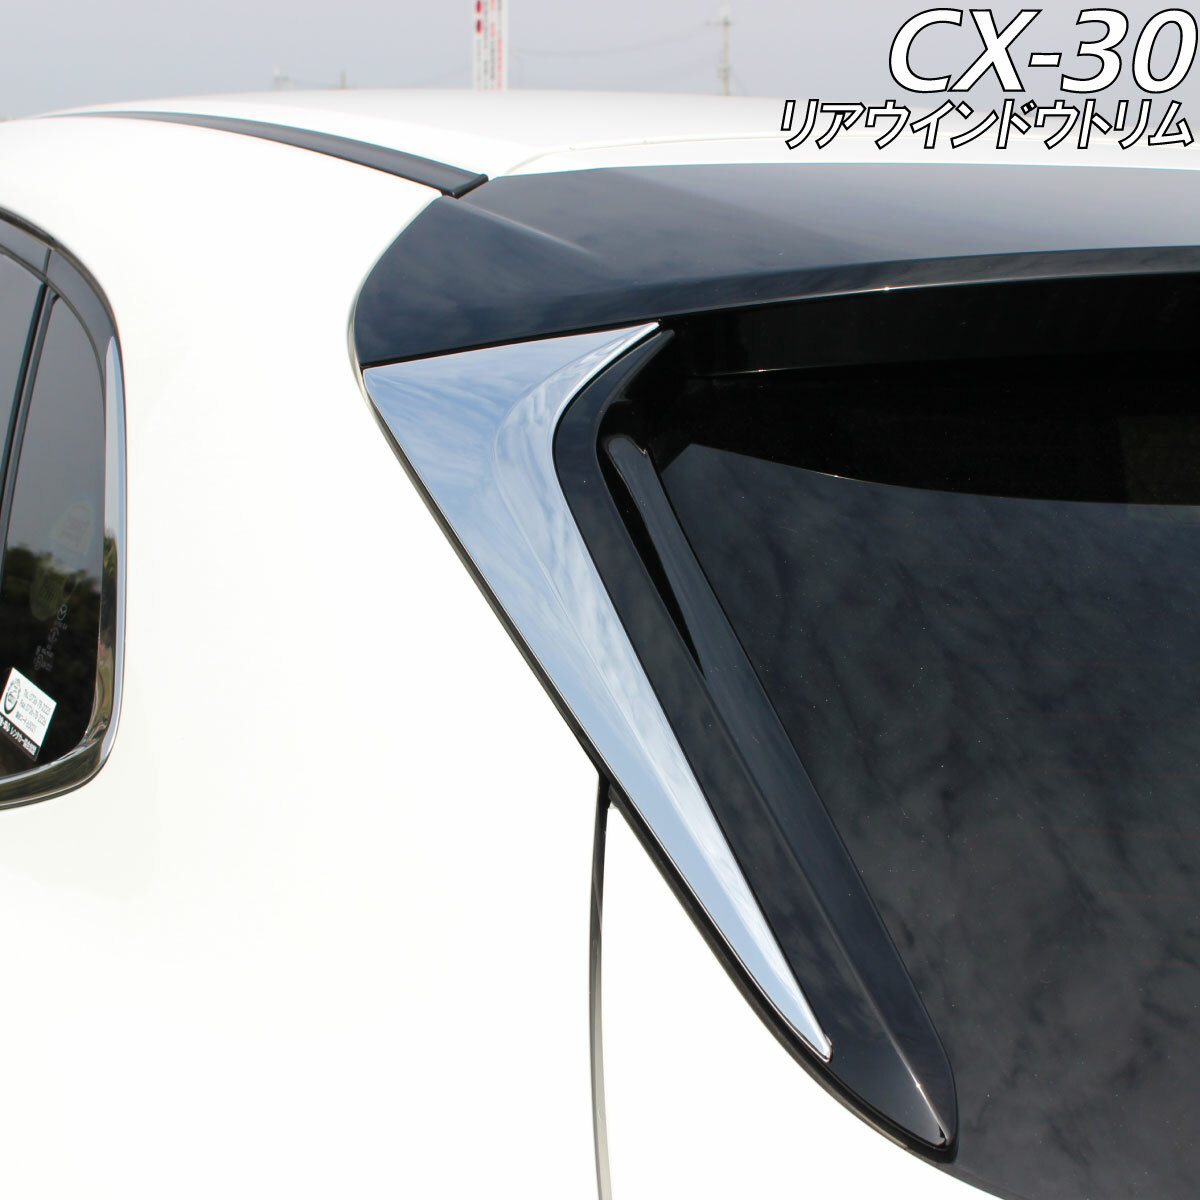 MAZDA マツダ CX-30 アクセサリ リア ルーフ ガーニッシュ トリム ウインドウ トリム クロムメッキ トリム クロムメッキ カスタムパーツ  外装パーツ 鏡面仕上げ 車種 専用設計 | ZERO-HOUSE